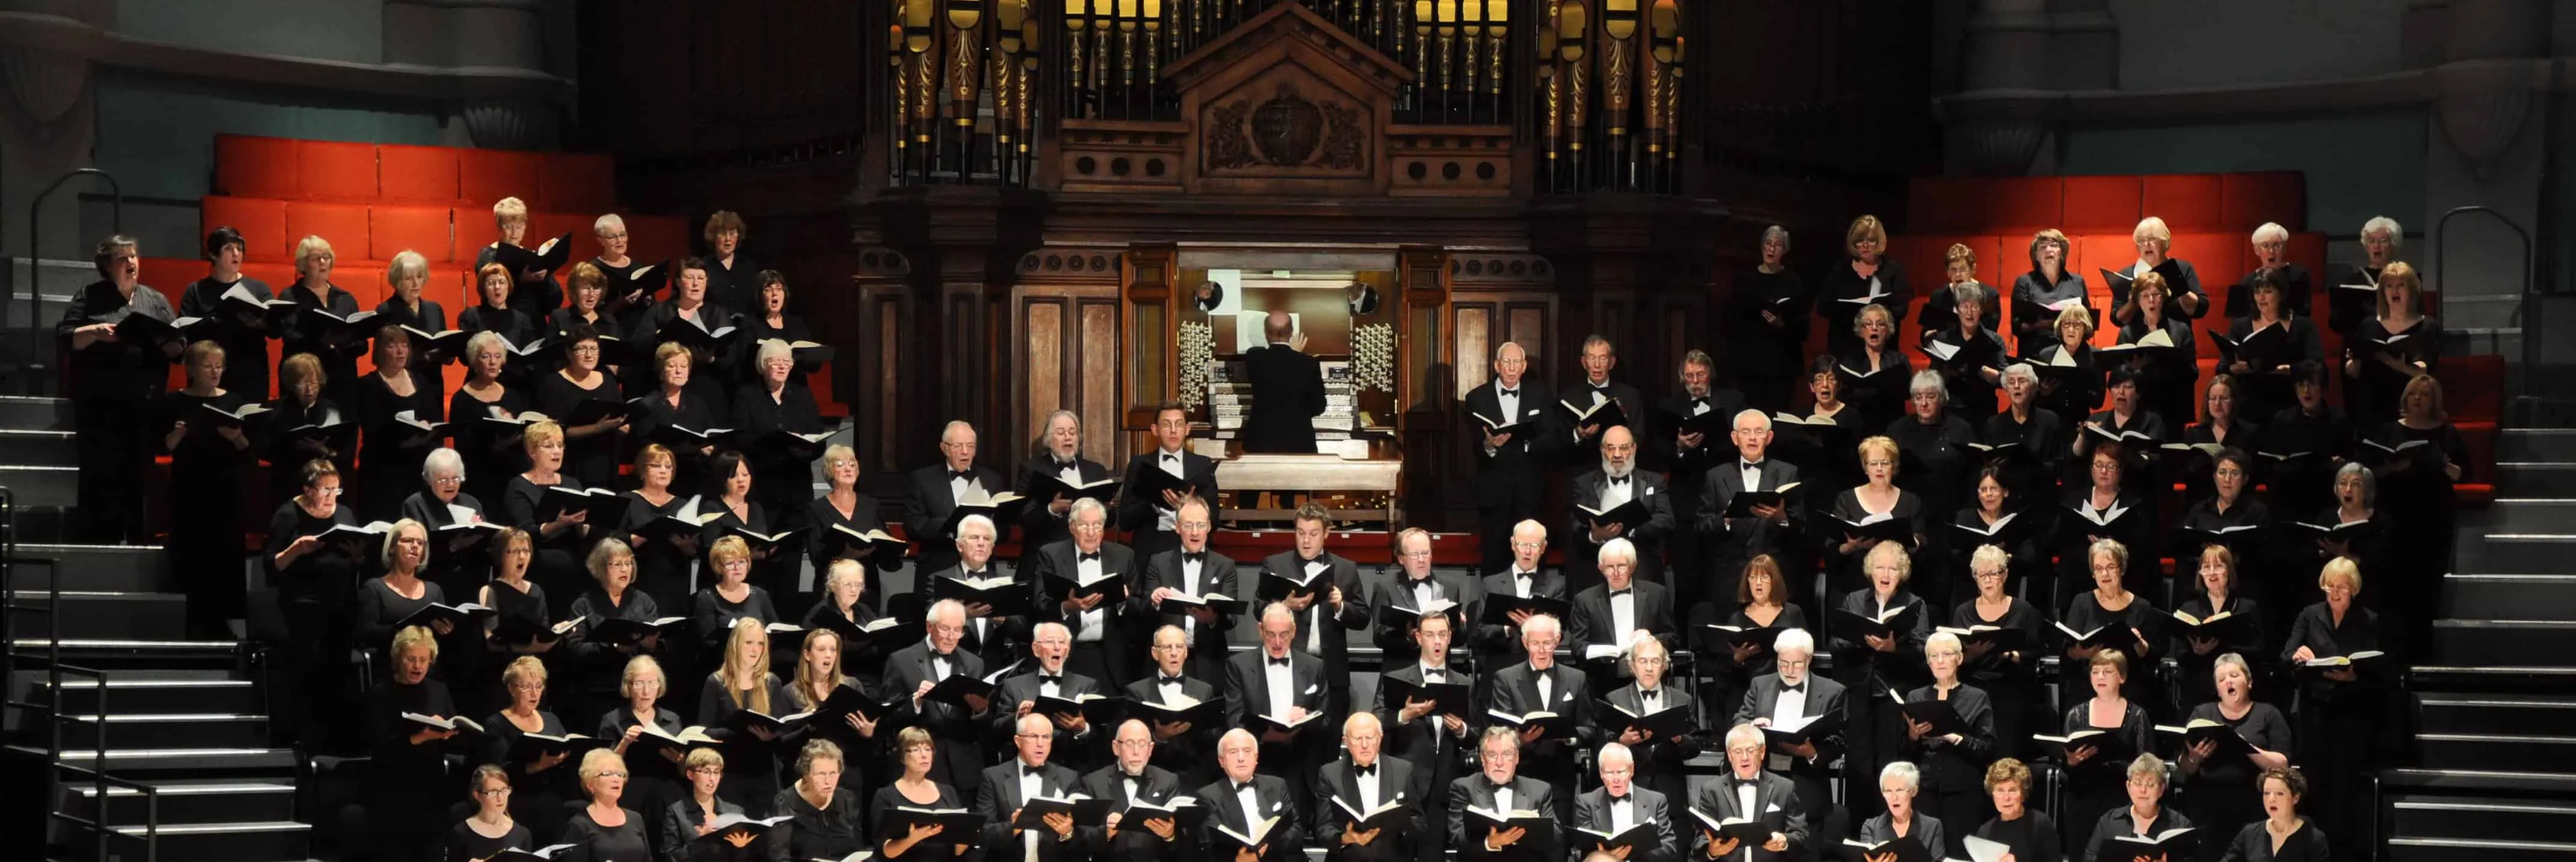 The Choir Primer